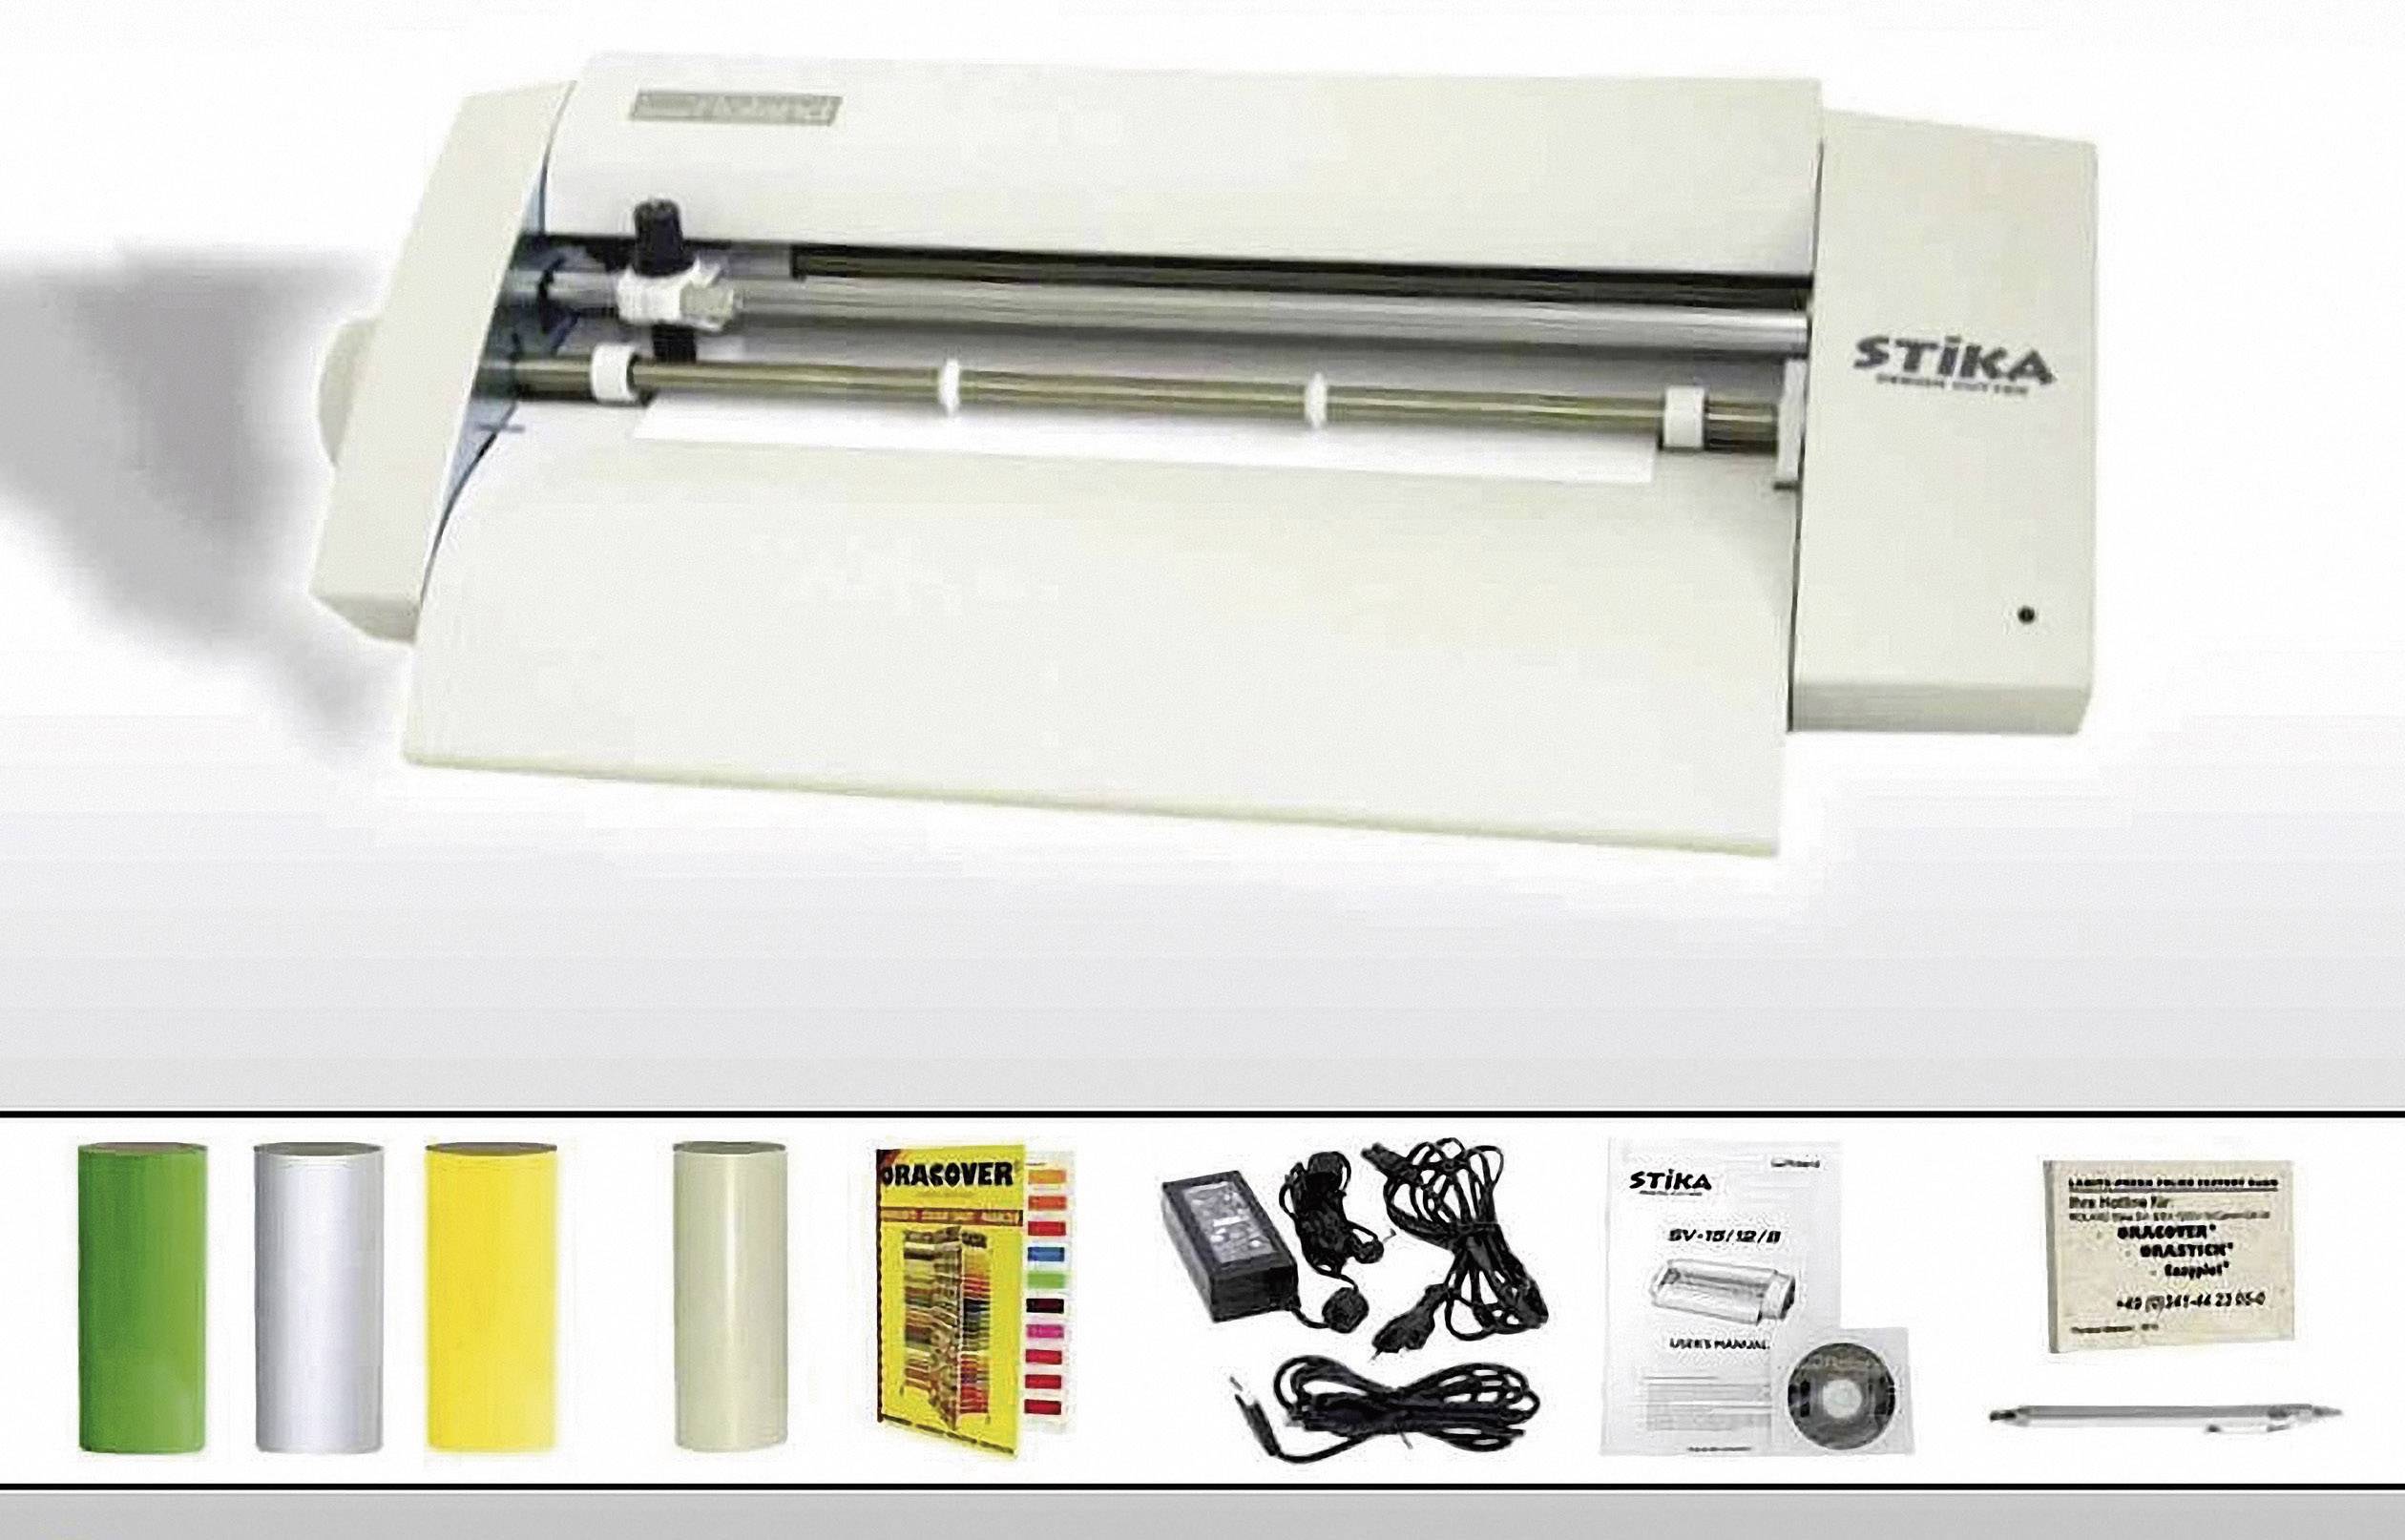 Roland Stika SV-12 Vinyl Cutter/Plotter